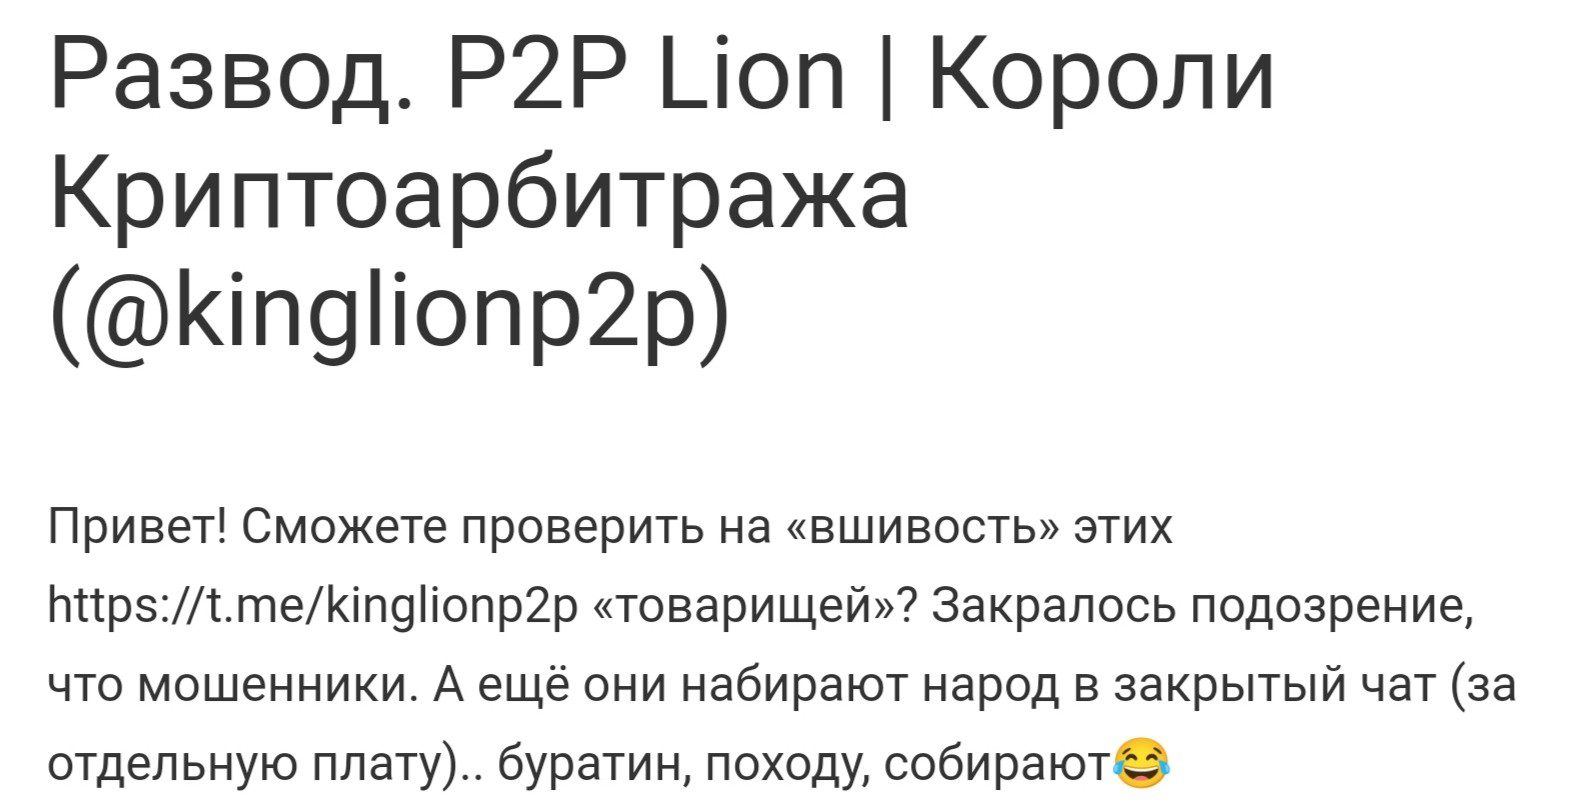 P2P Lion отзывы